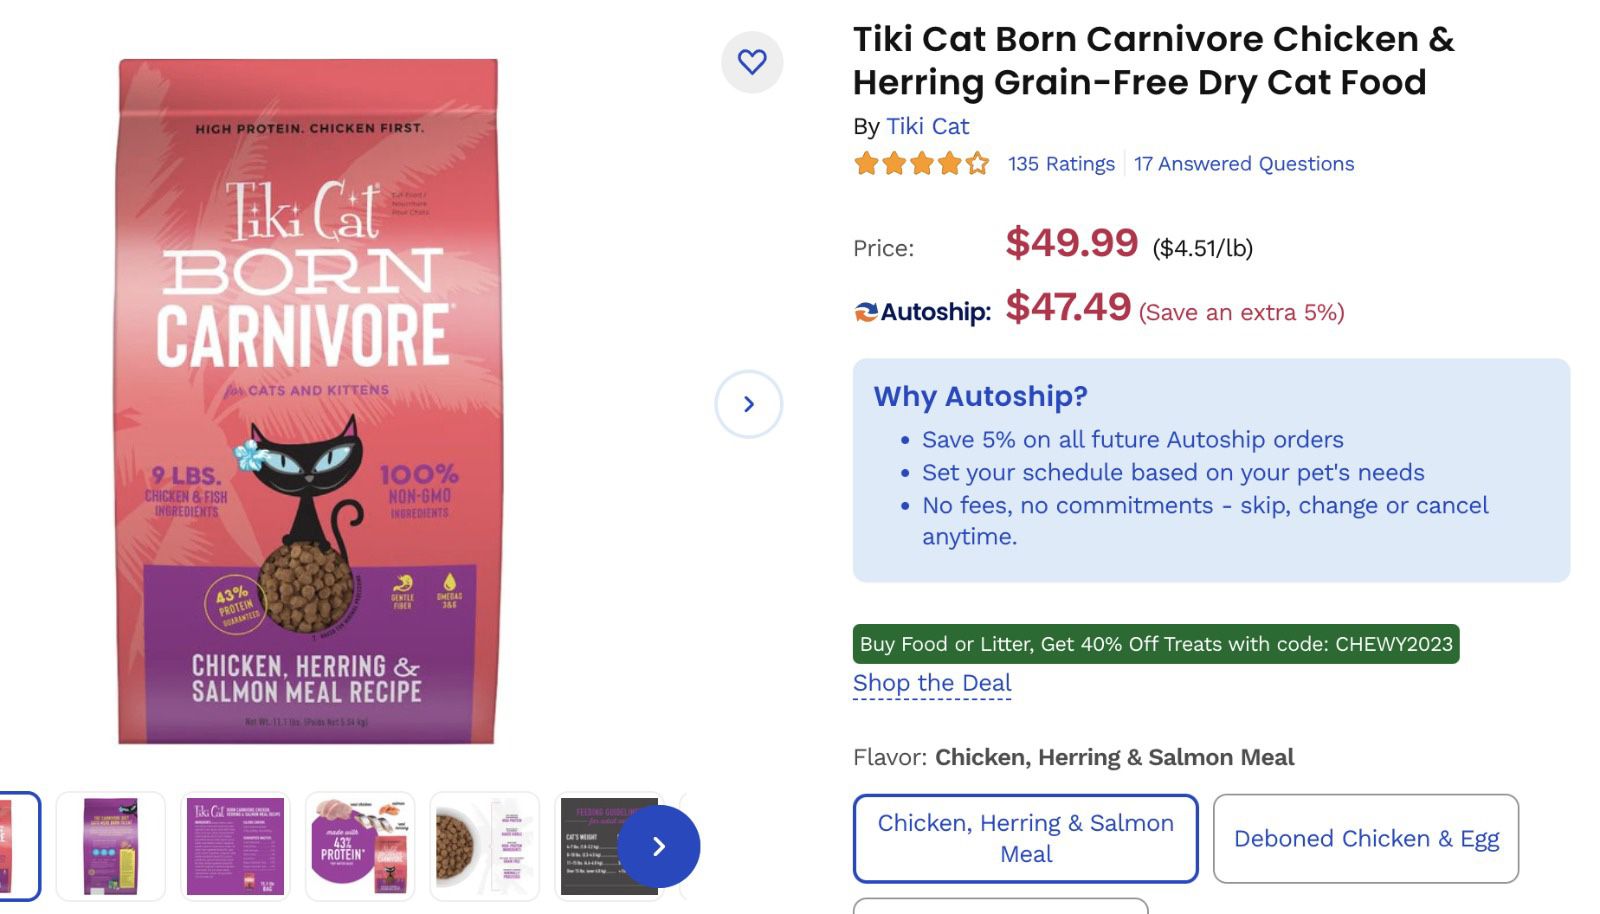 3- Tiki Cat Born Carnivore Chicken & Herring Grain-Free Dry Cat Food (11.1lbs)